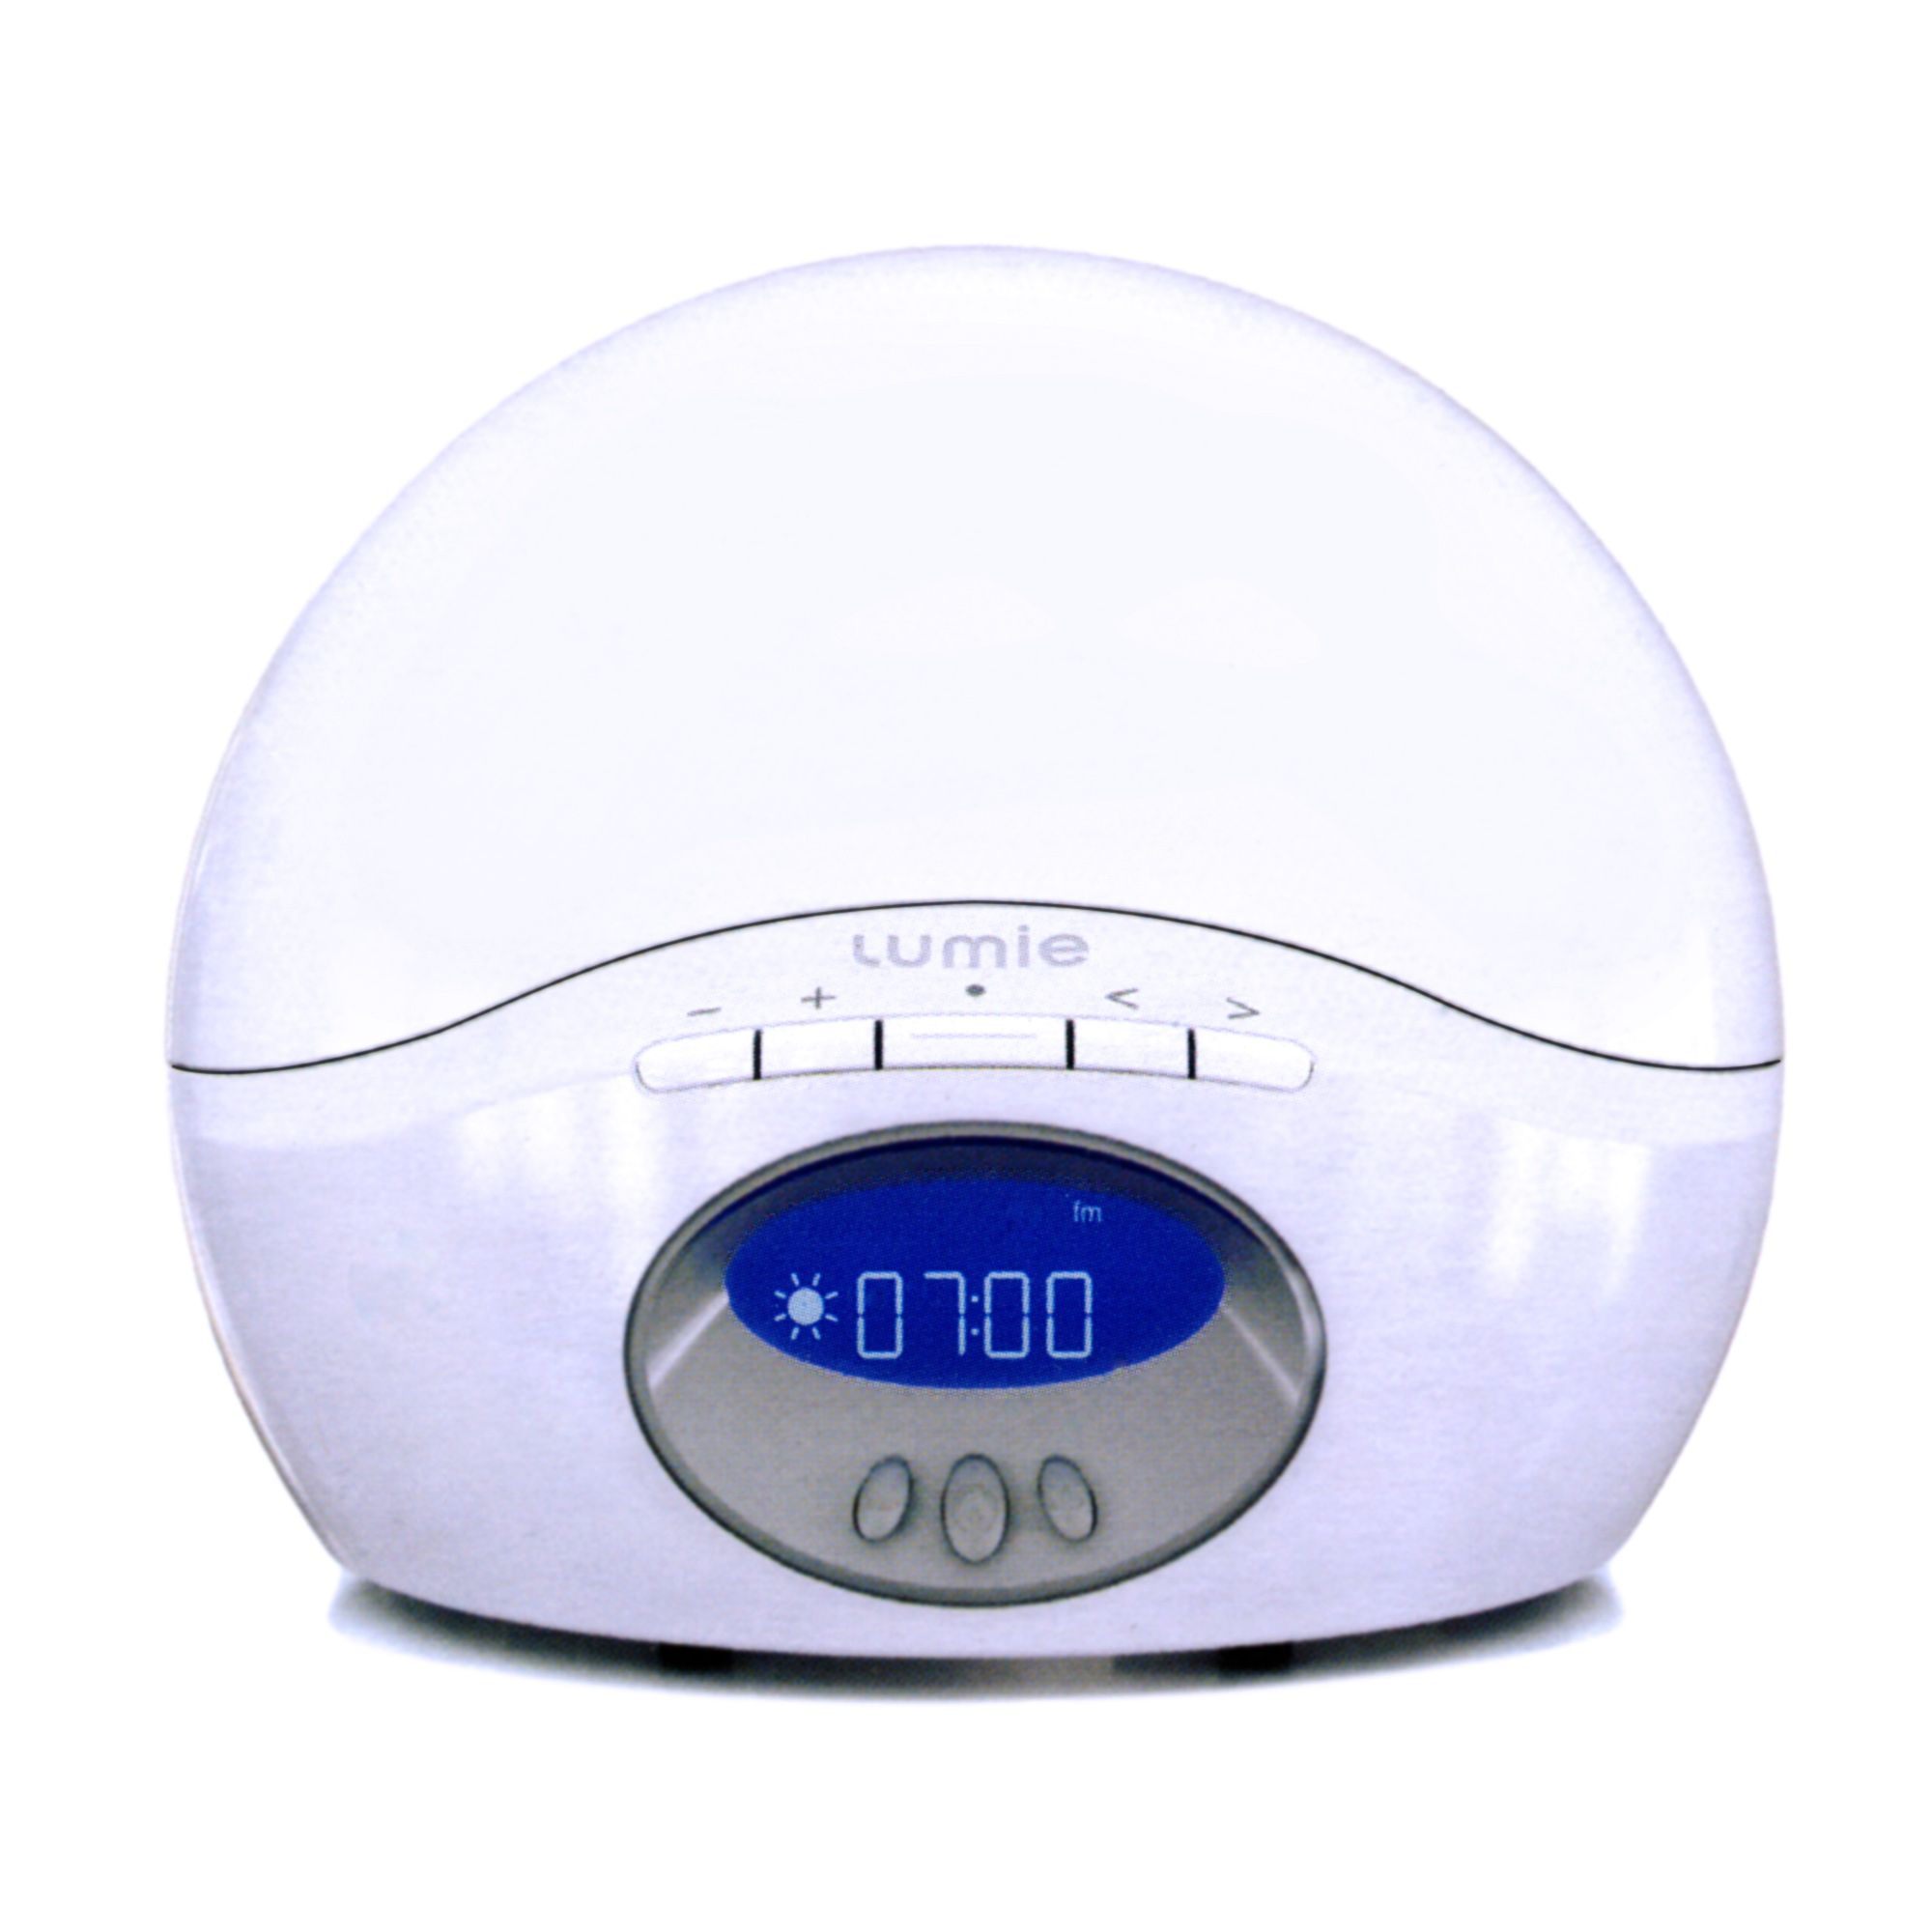 Lumie Bodyclock Active 250, Dawn Simulator Alarm Clock with FM Radio - image 1 of 2